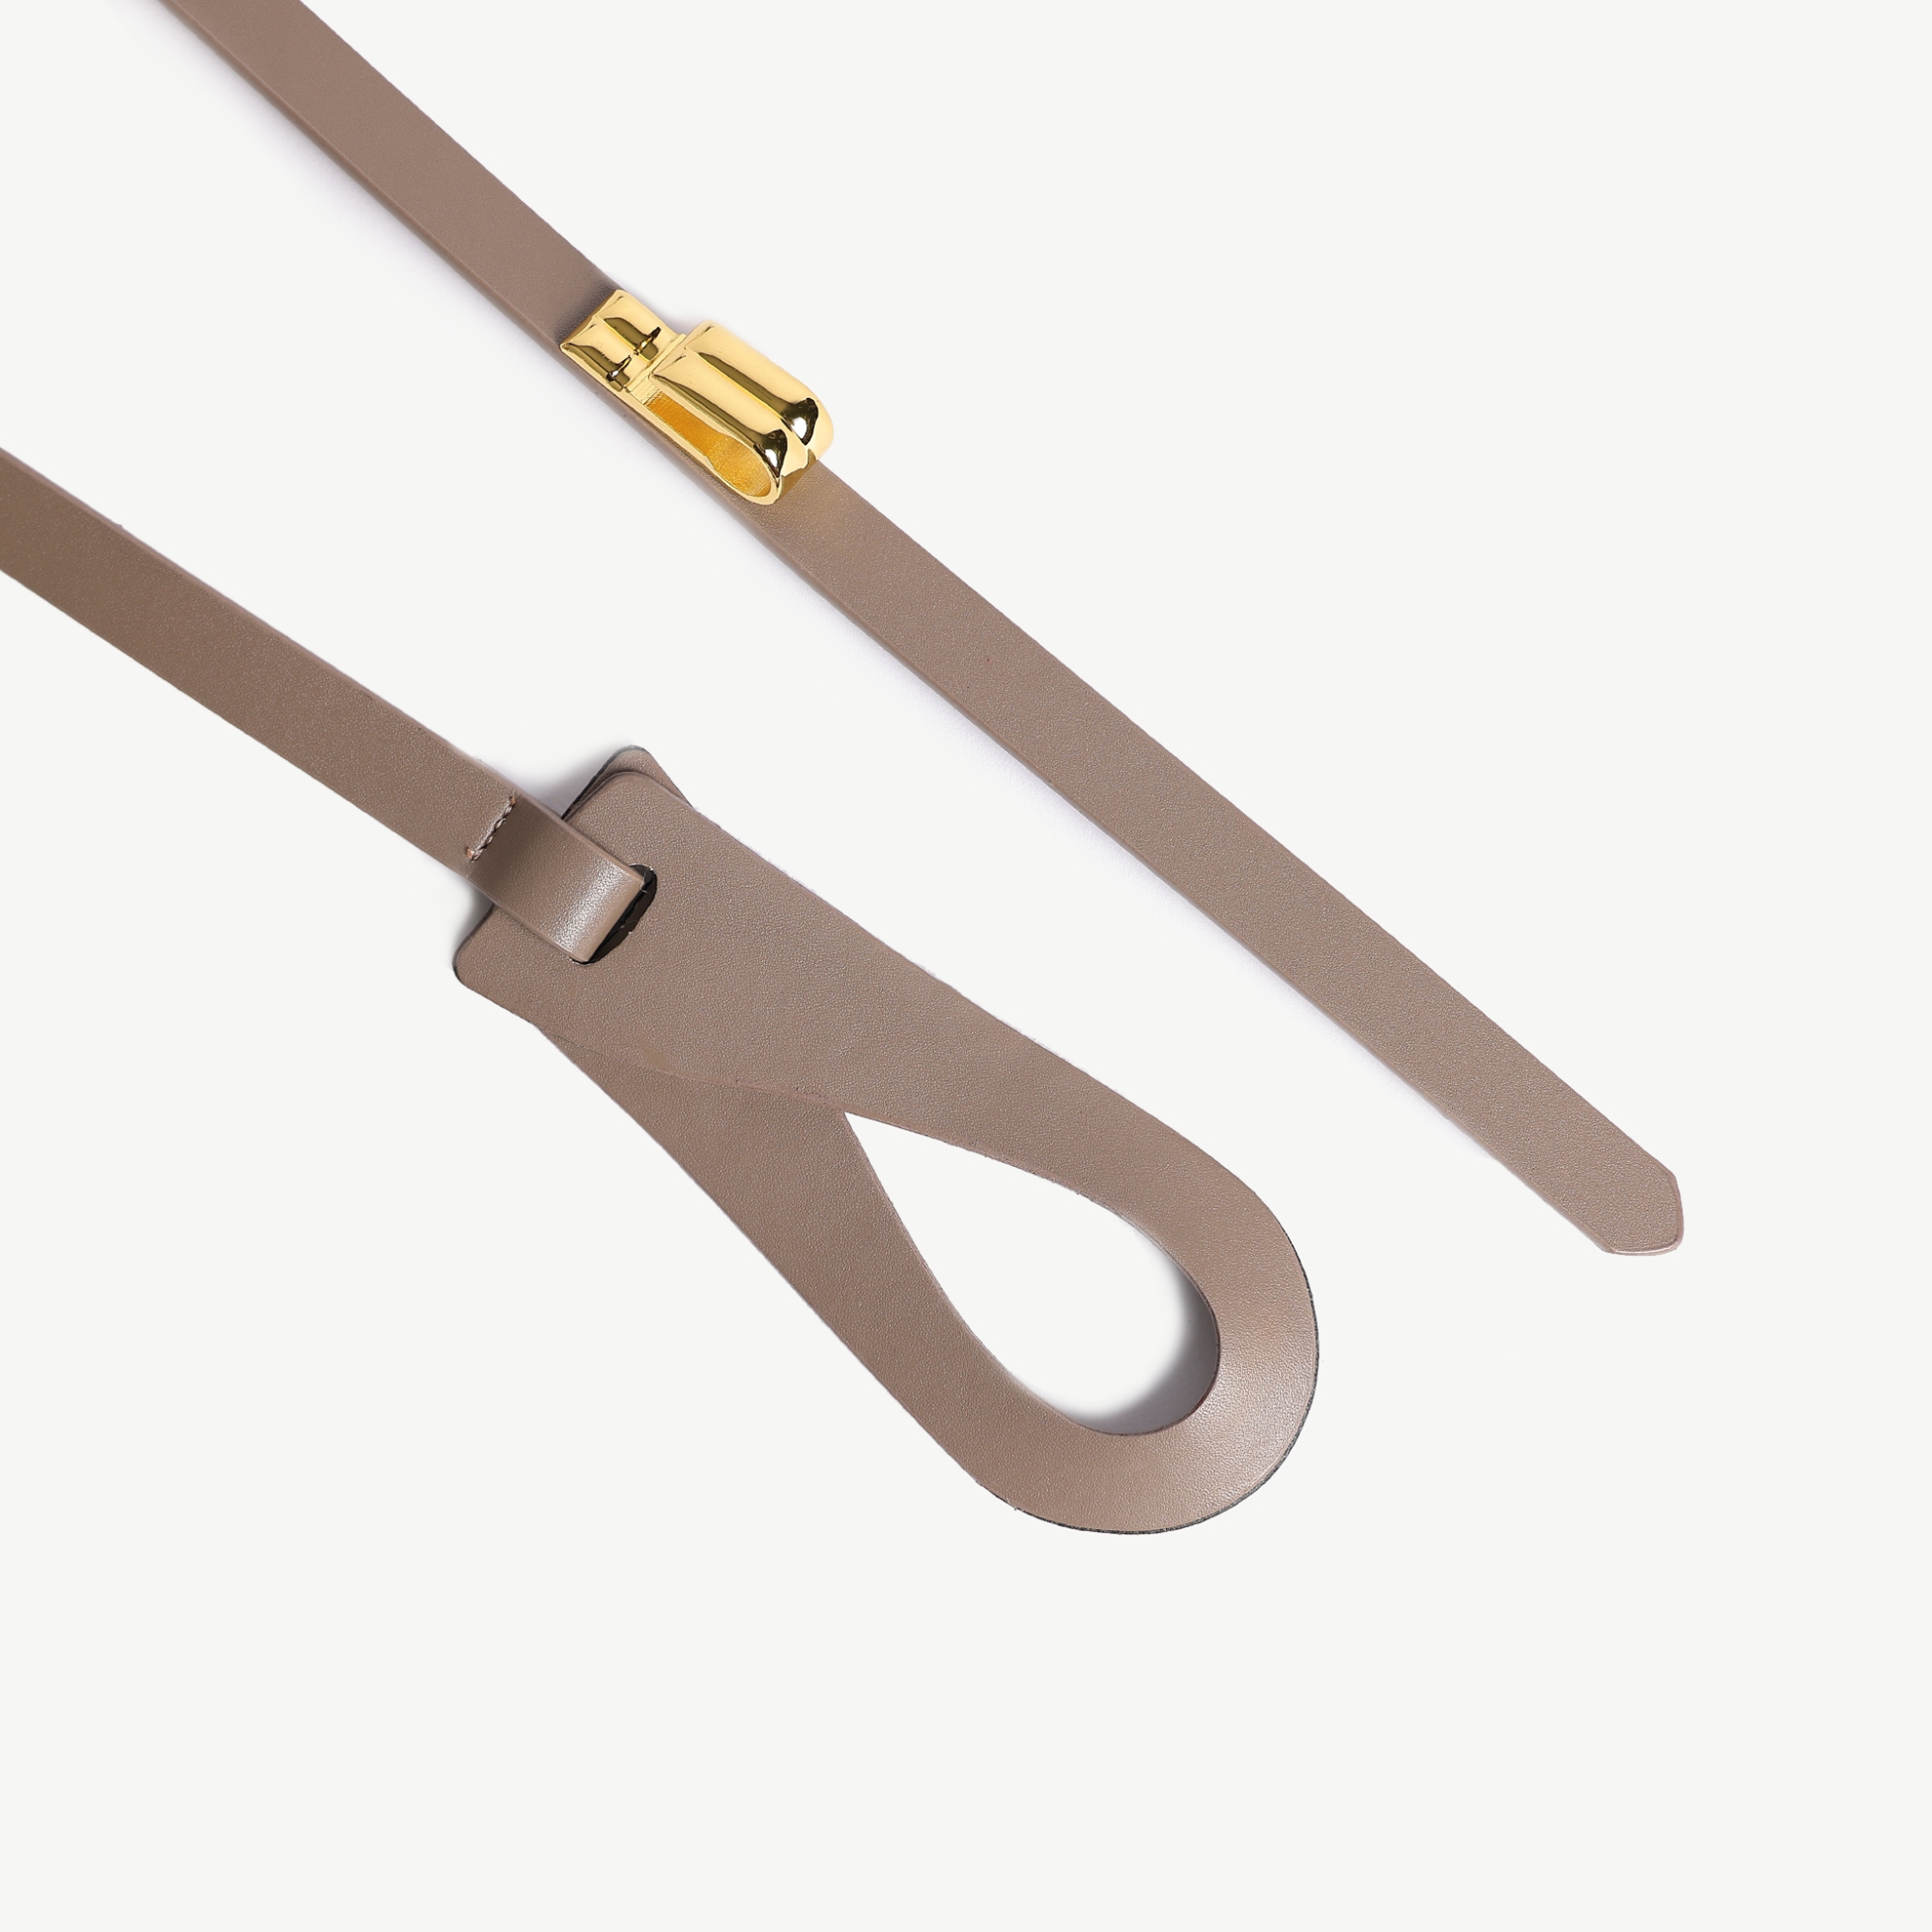 Adjustable Waist Belt